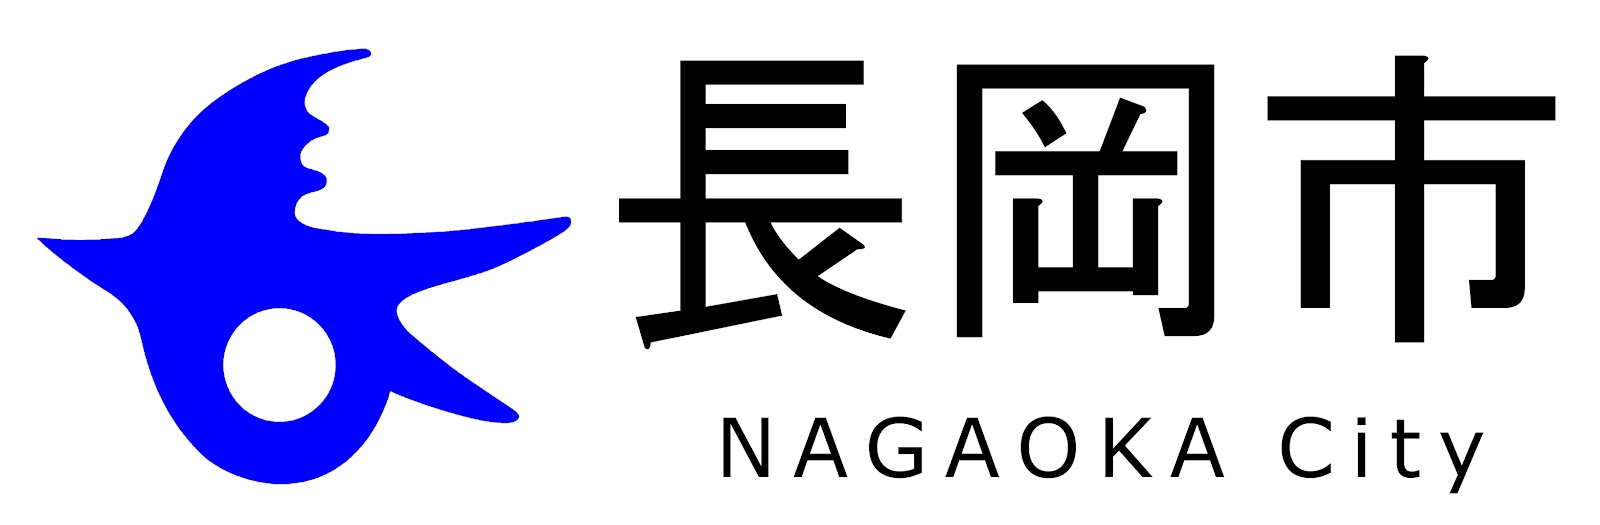 Nagaoka City